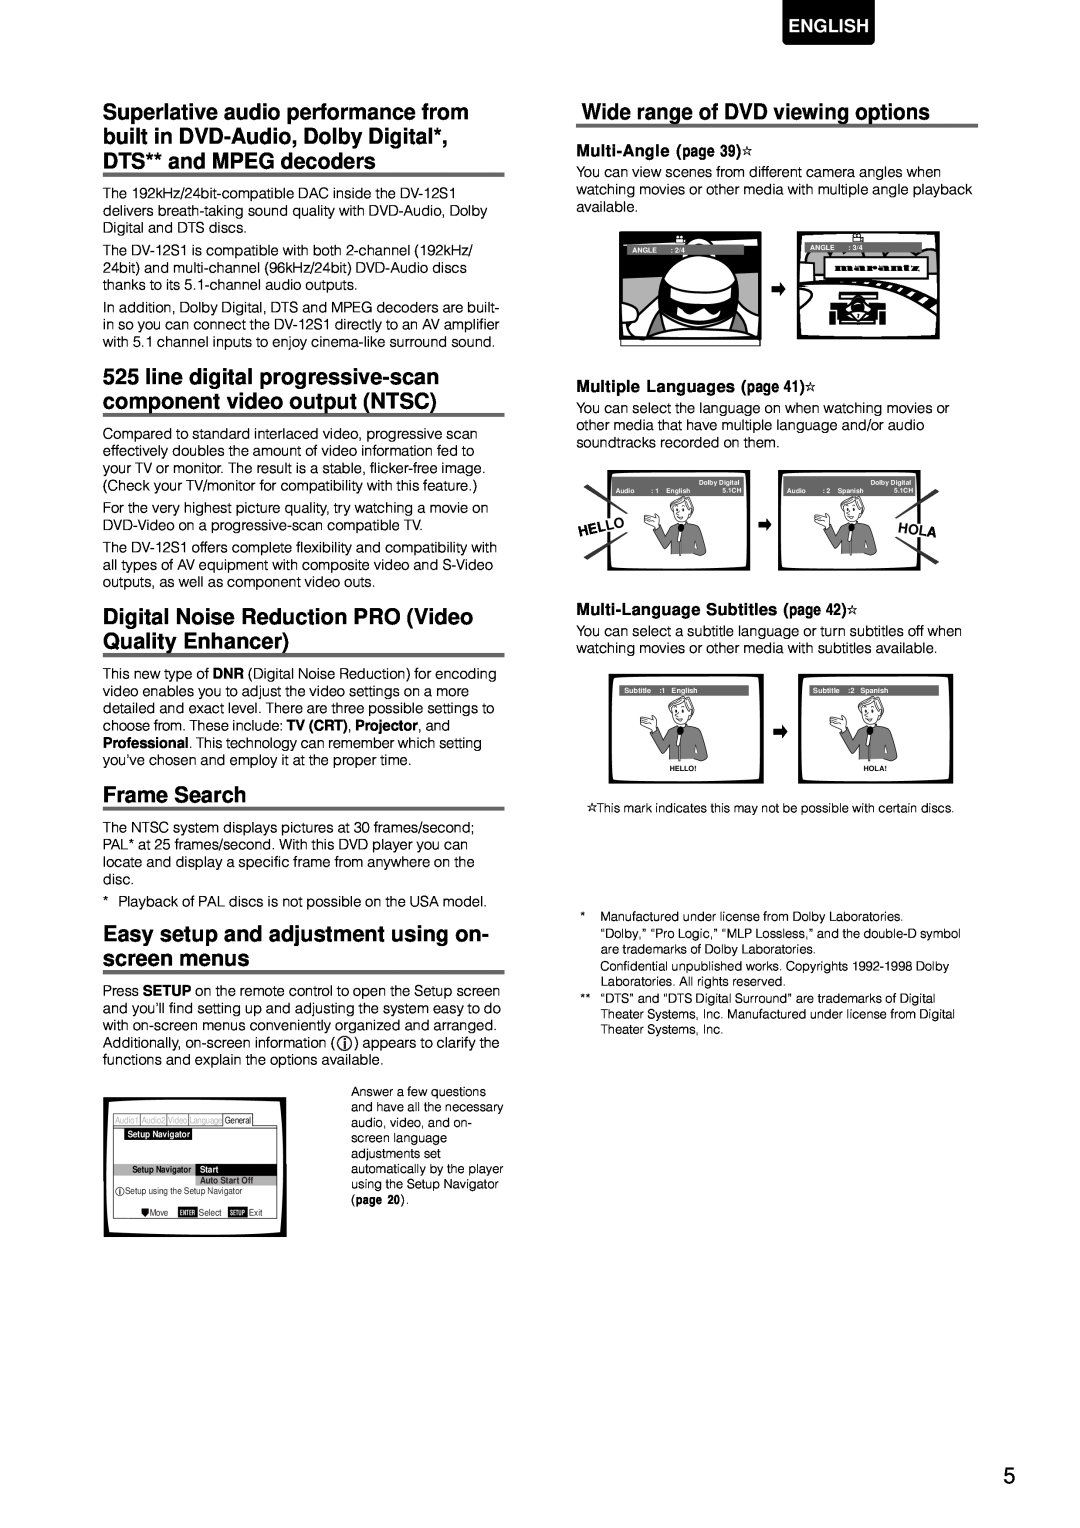 Marantz DV-12S1 line digital progressive-scan component video output NTSC, Frame Search, Wide range of DVD viewing options 